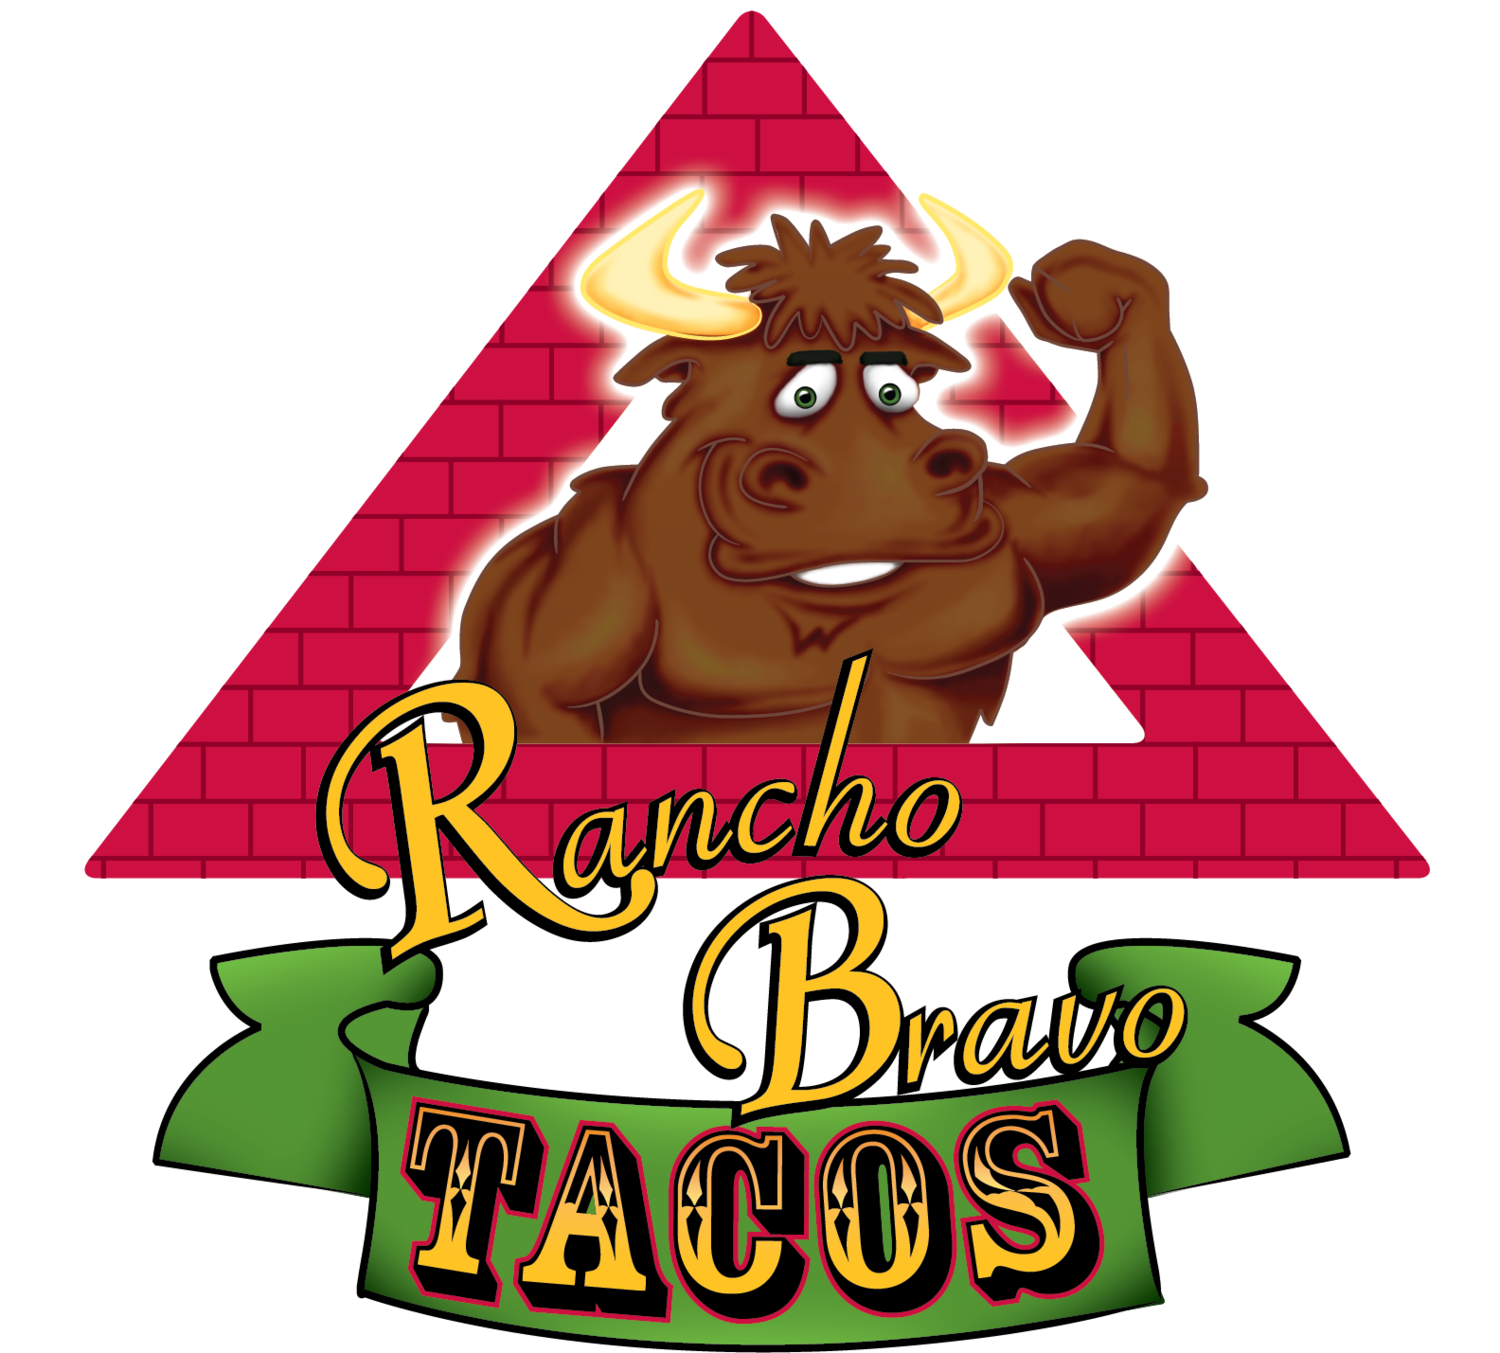 Rancho Bravo Tacos